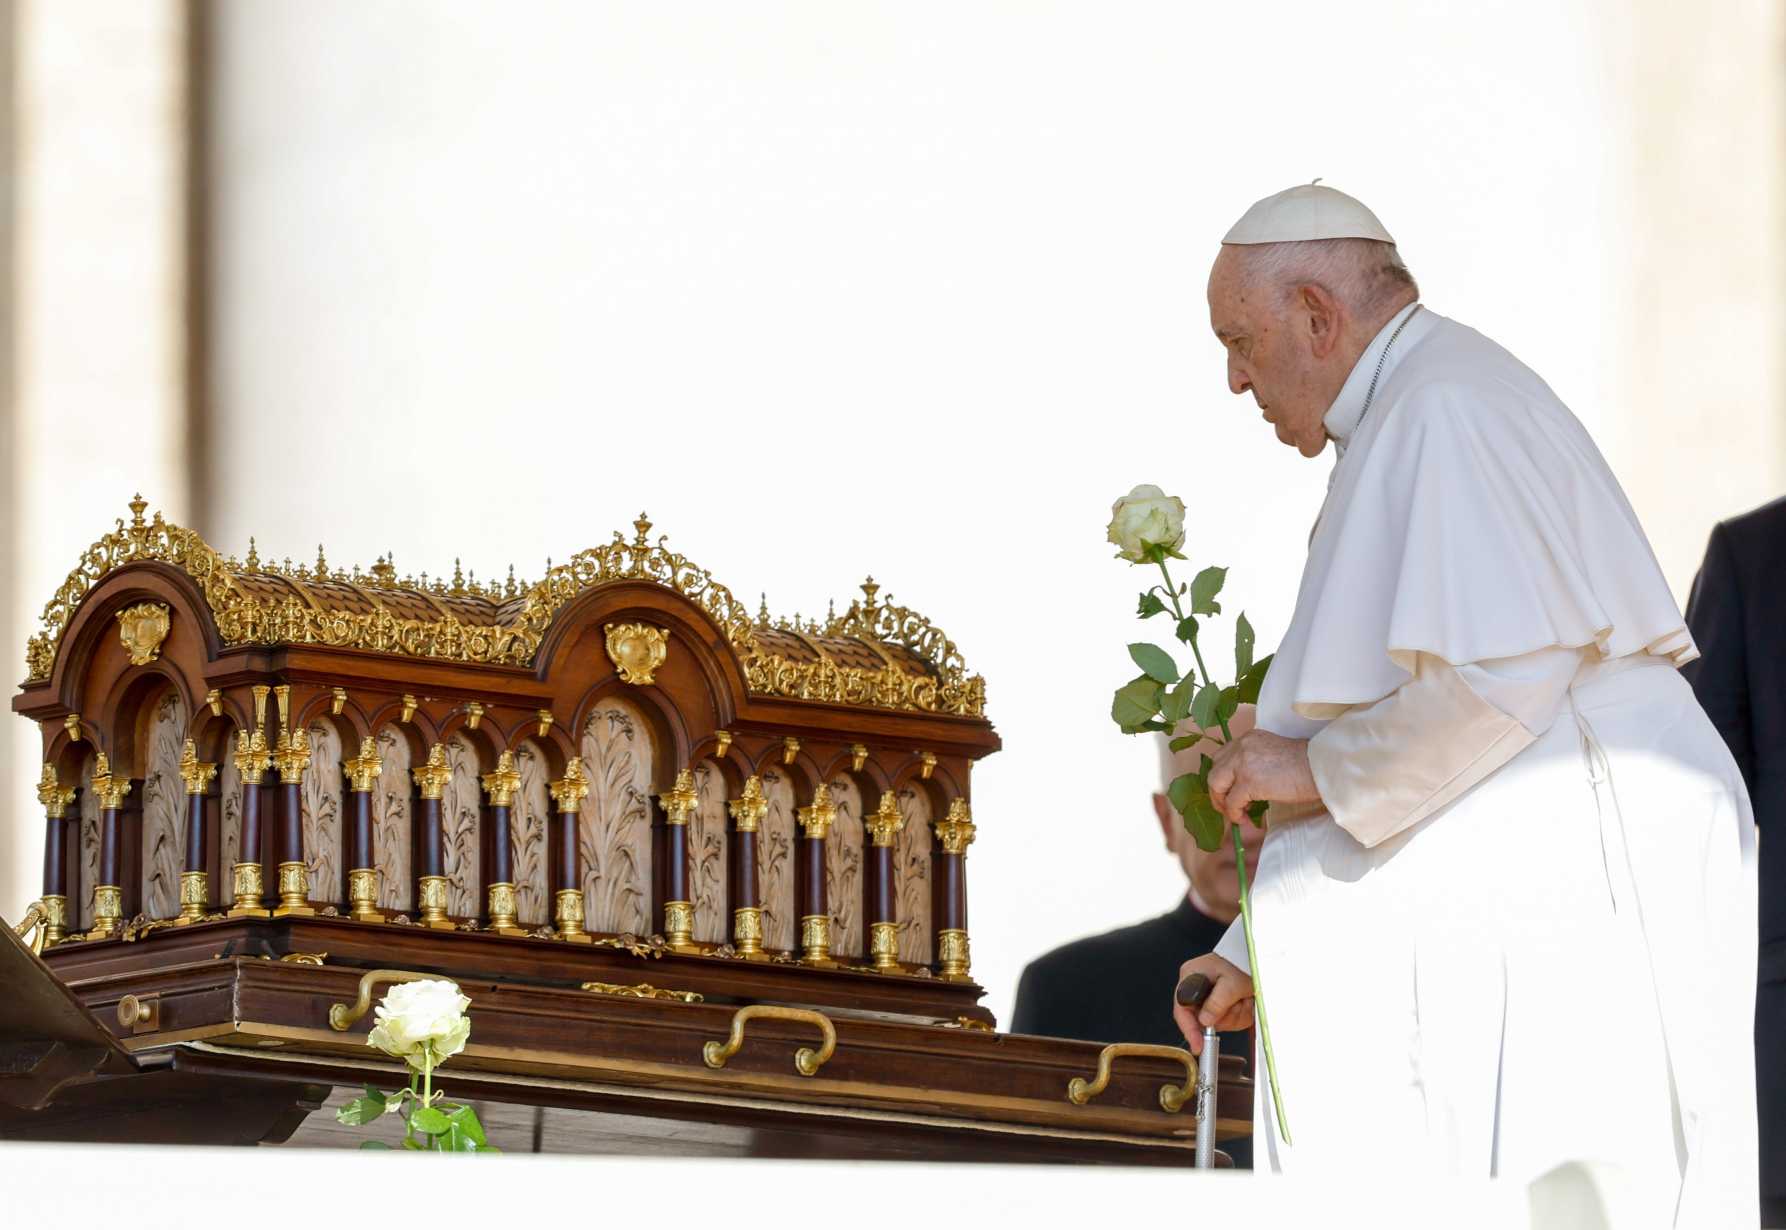 St. Thérèse teaches simplicity, love, trust, pope says in document